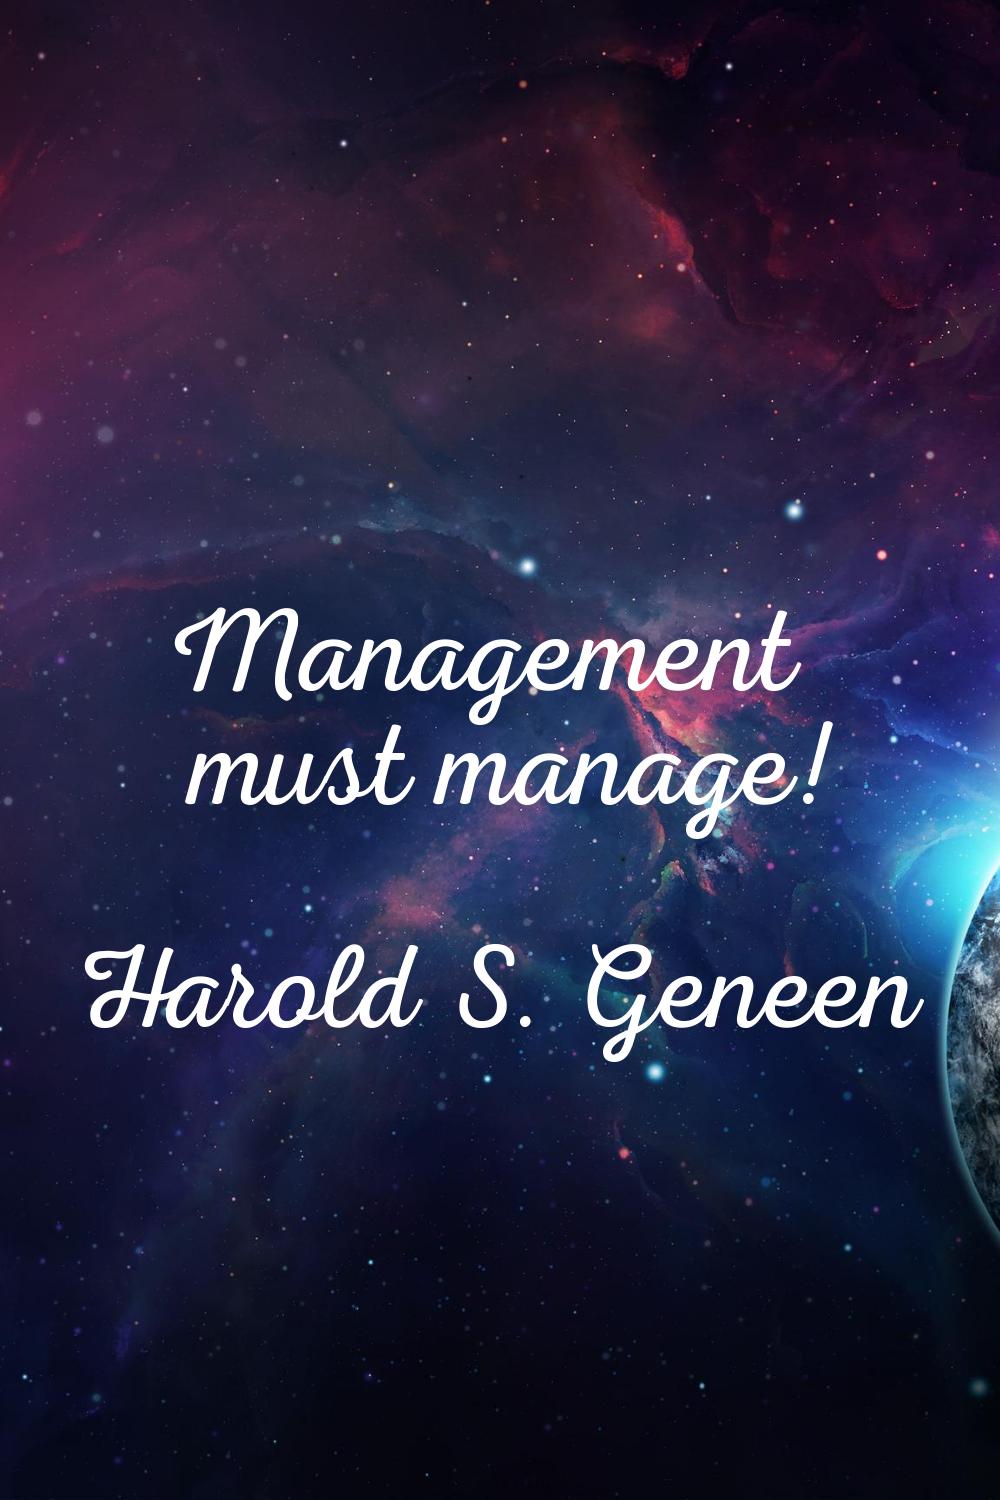 Management must manage!